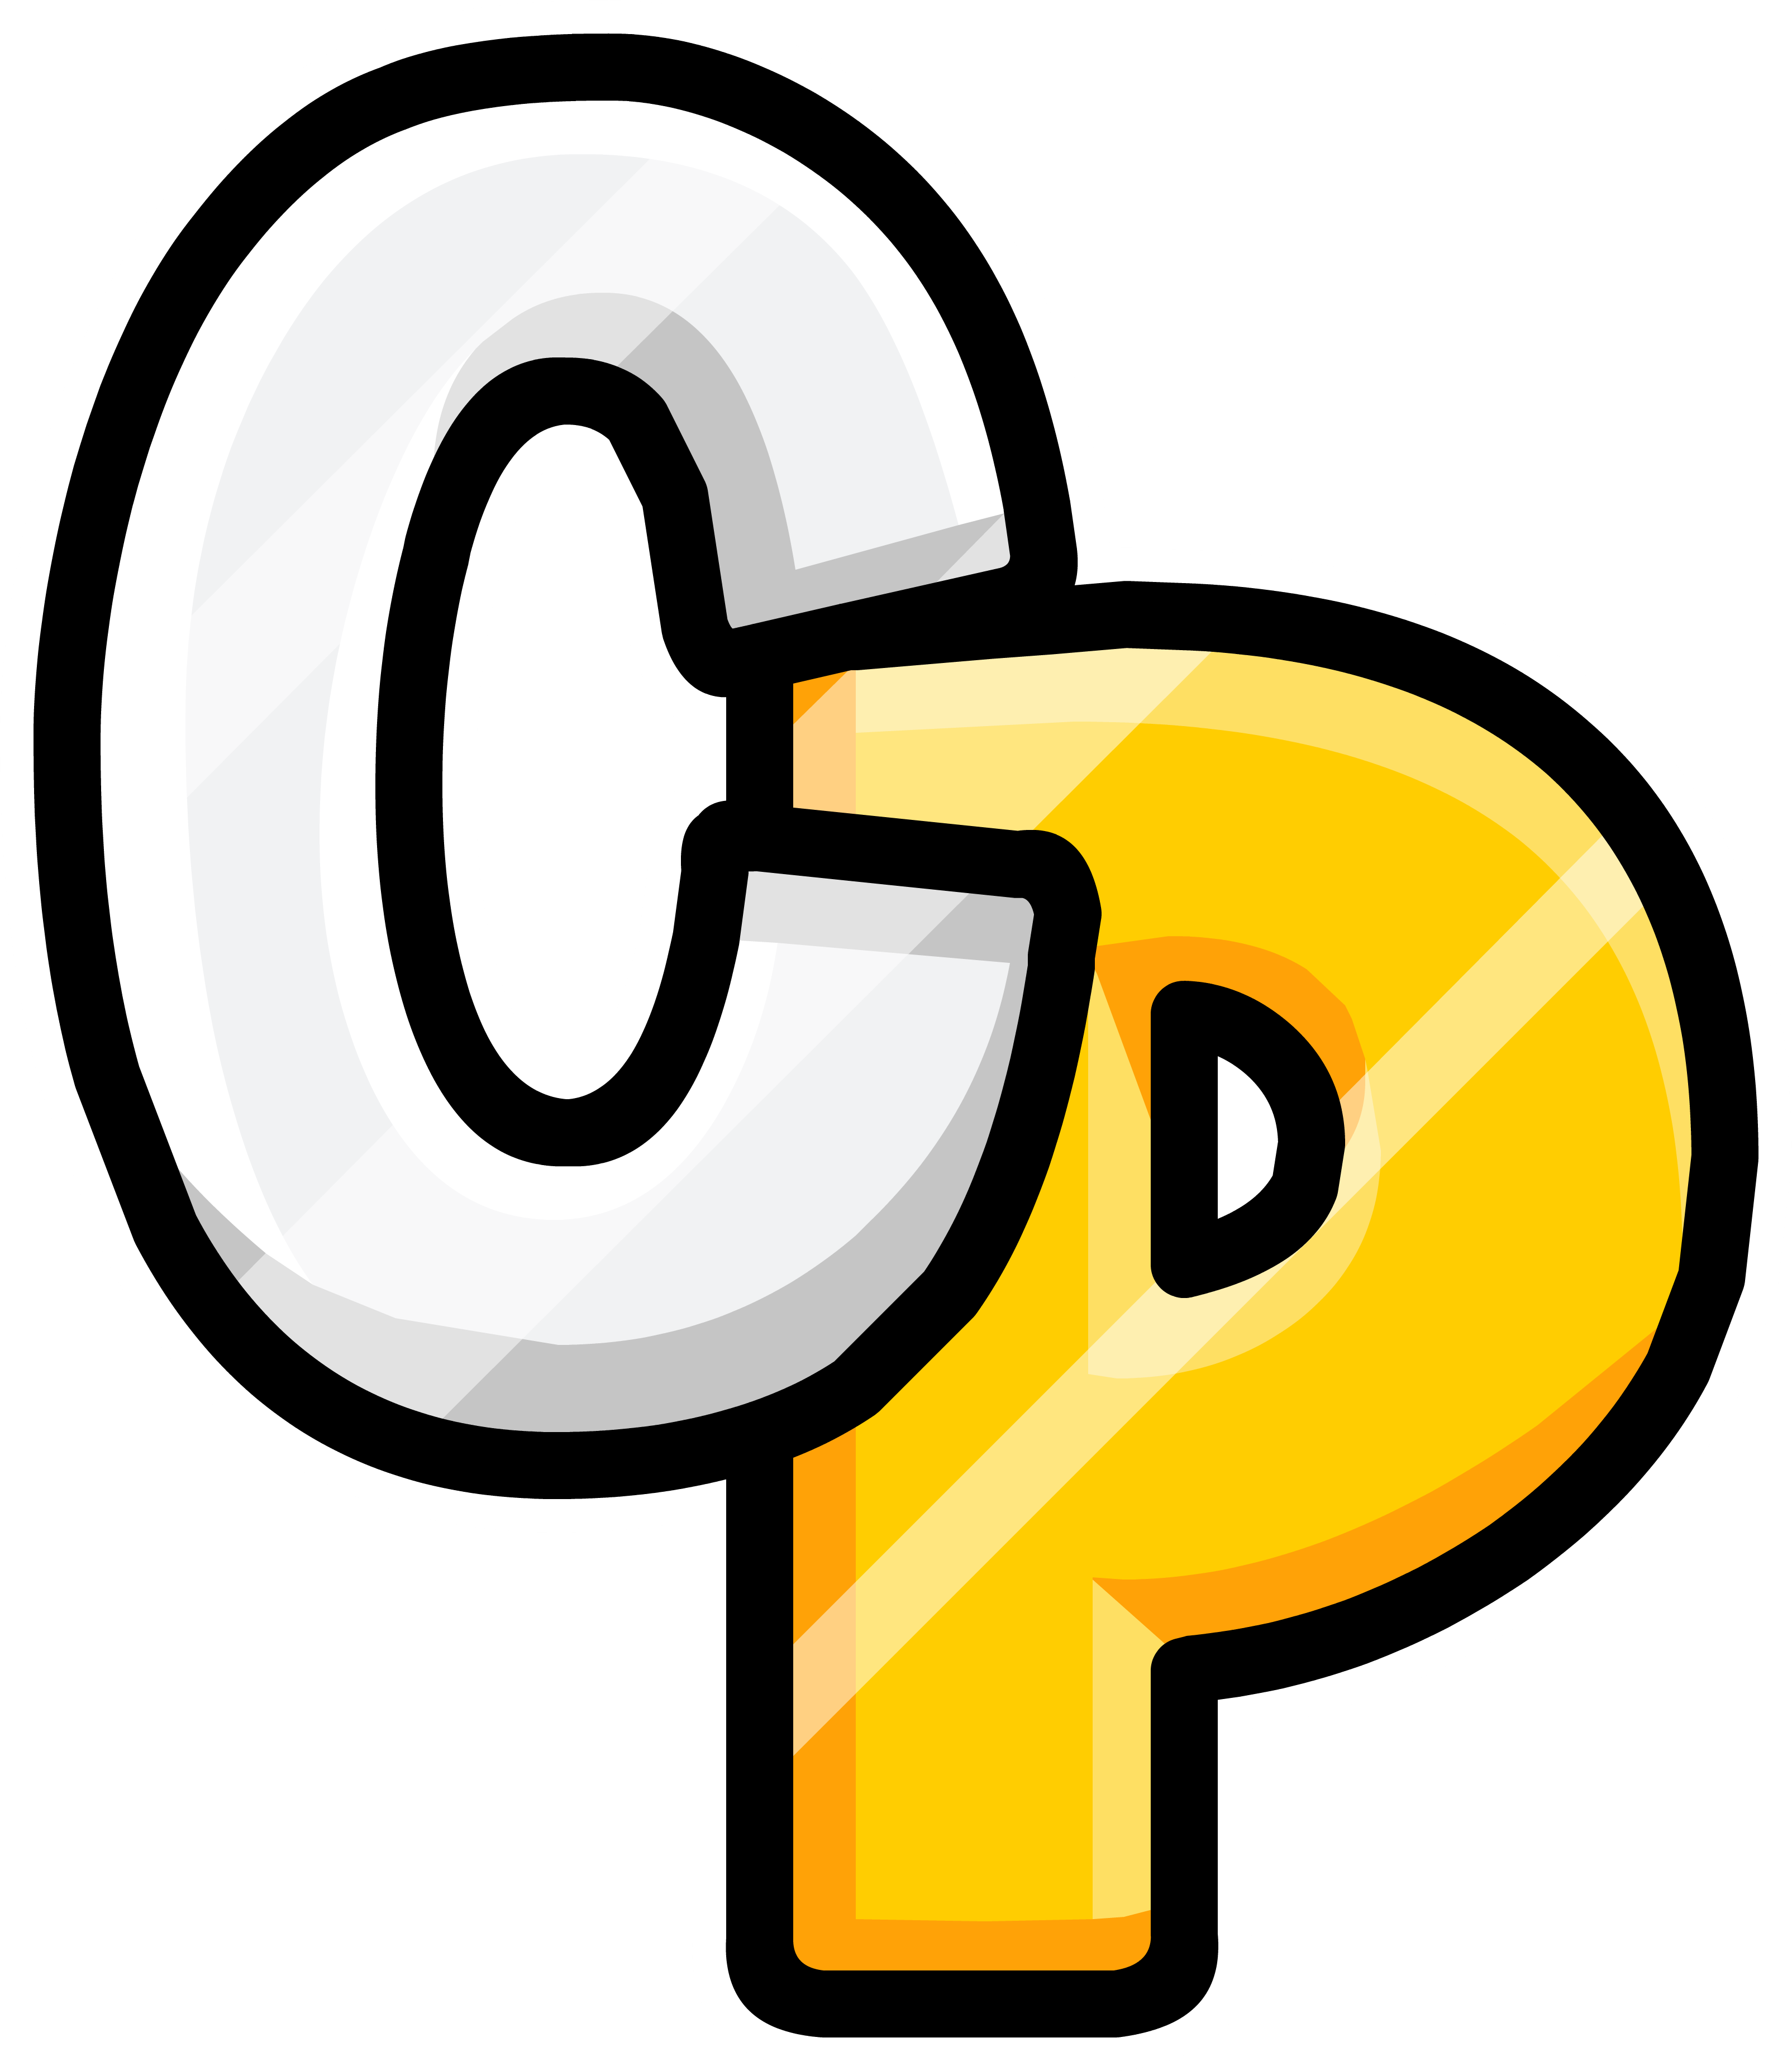 cp logo — Freeimage.host